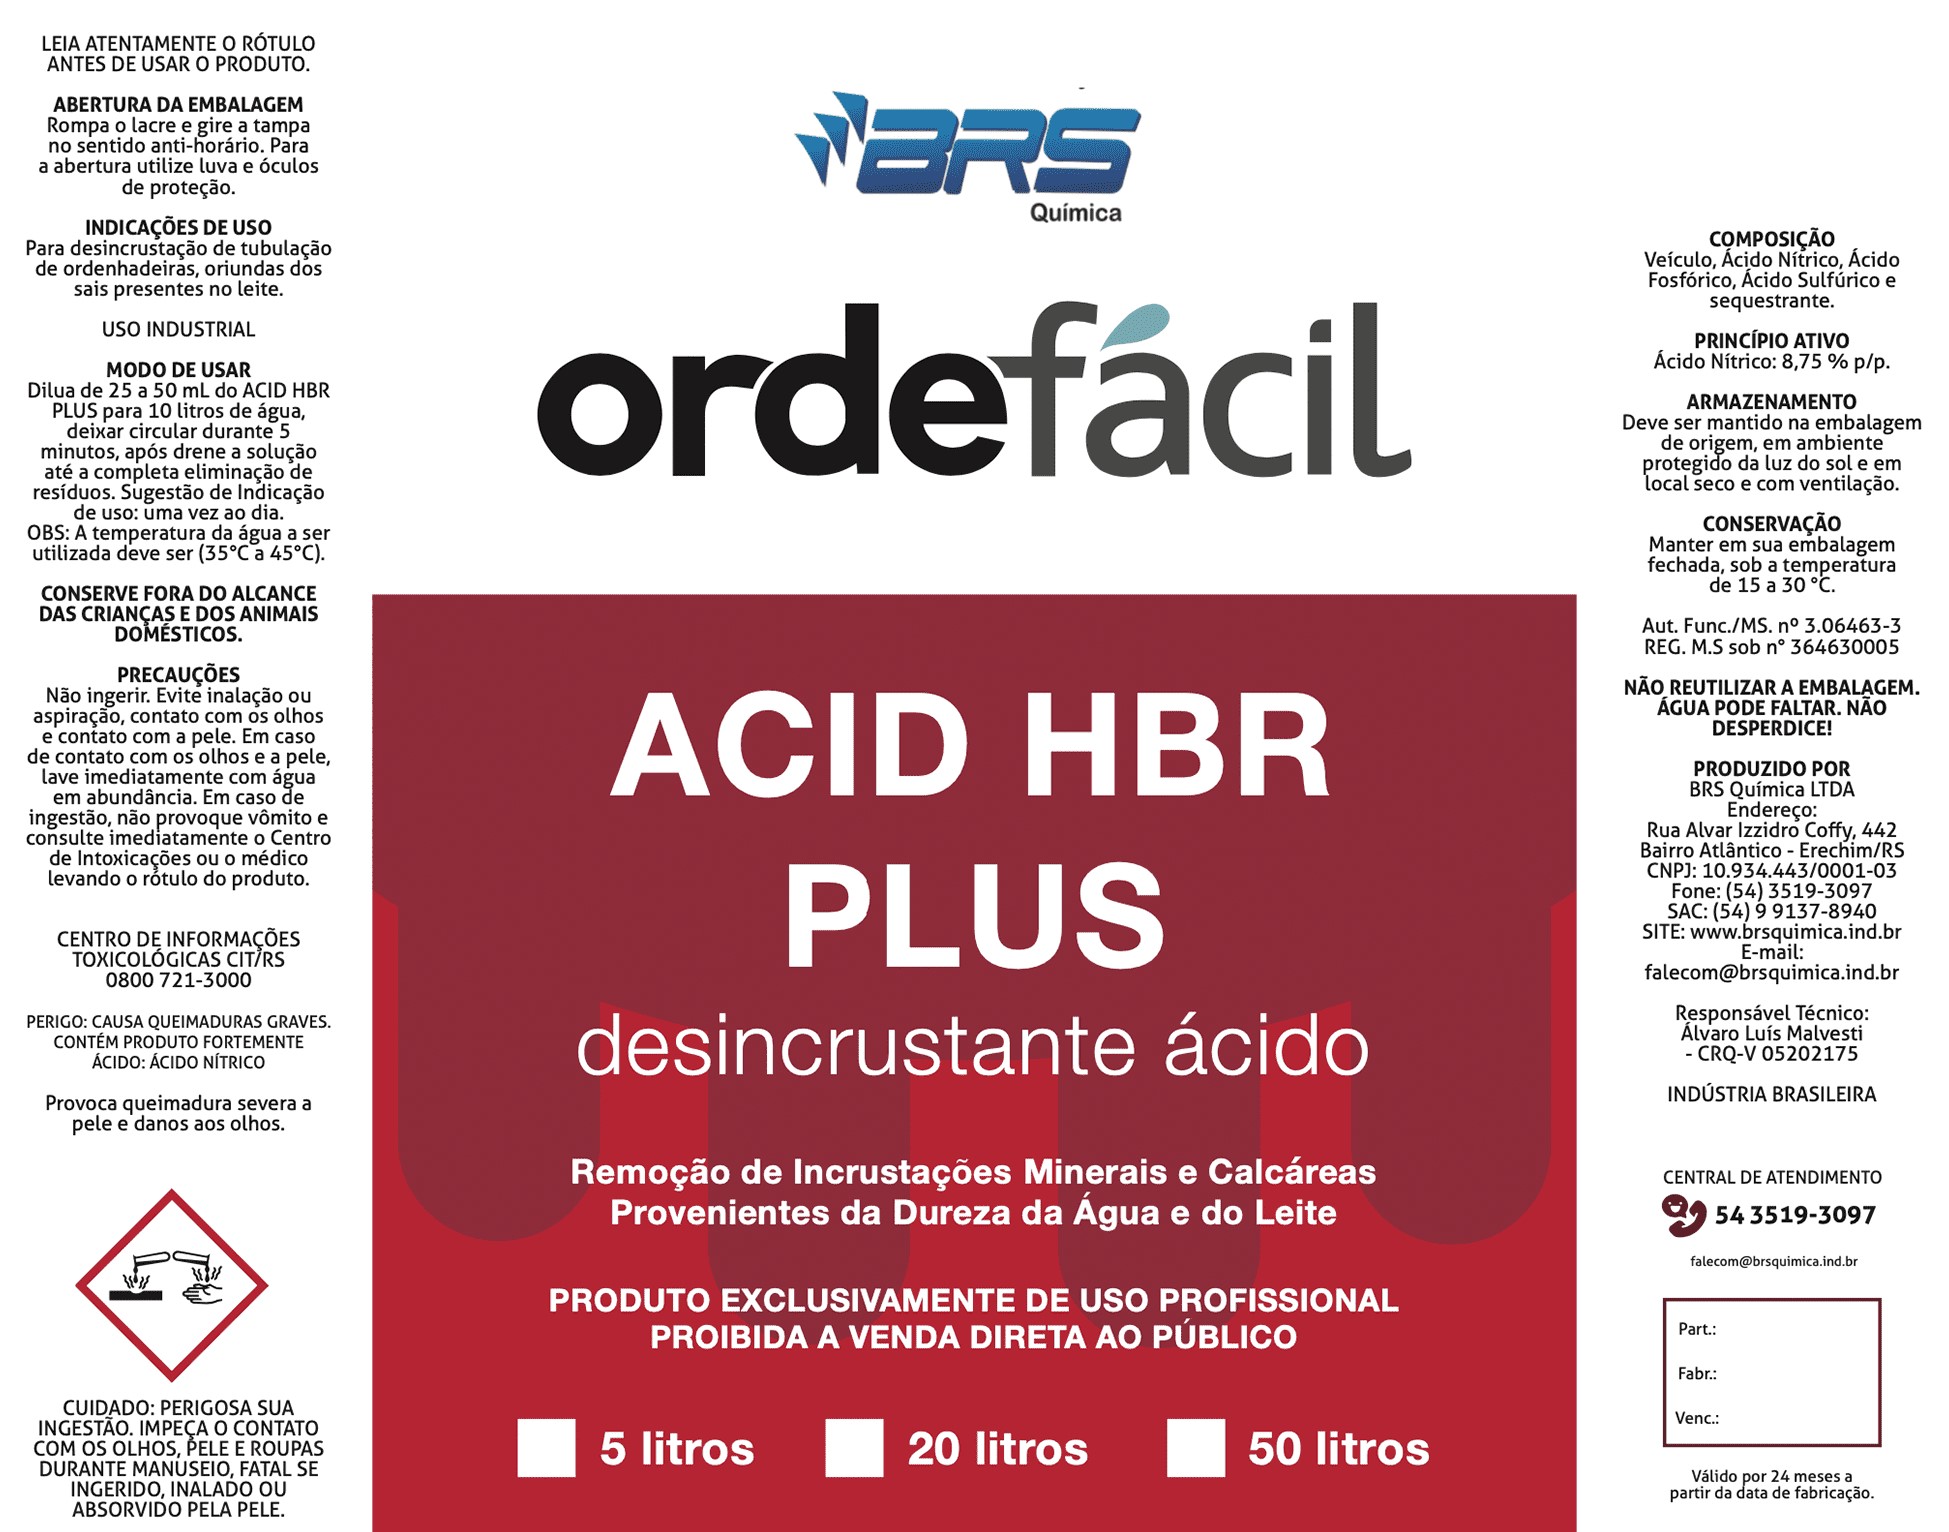 Acid Hbr Plus Detergente Ácido